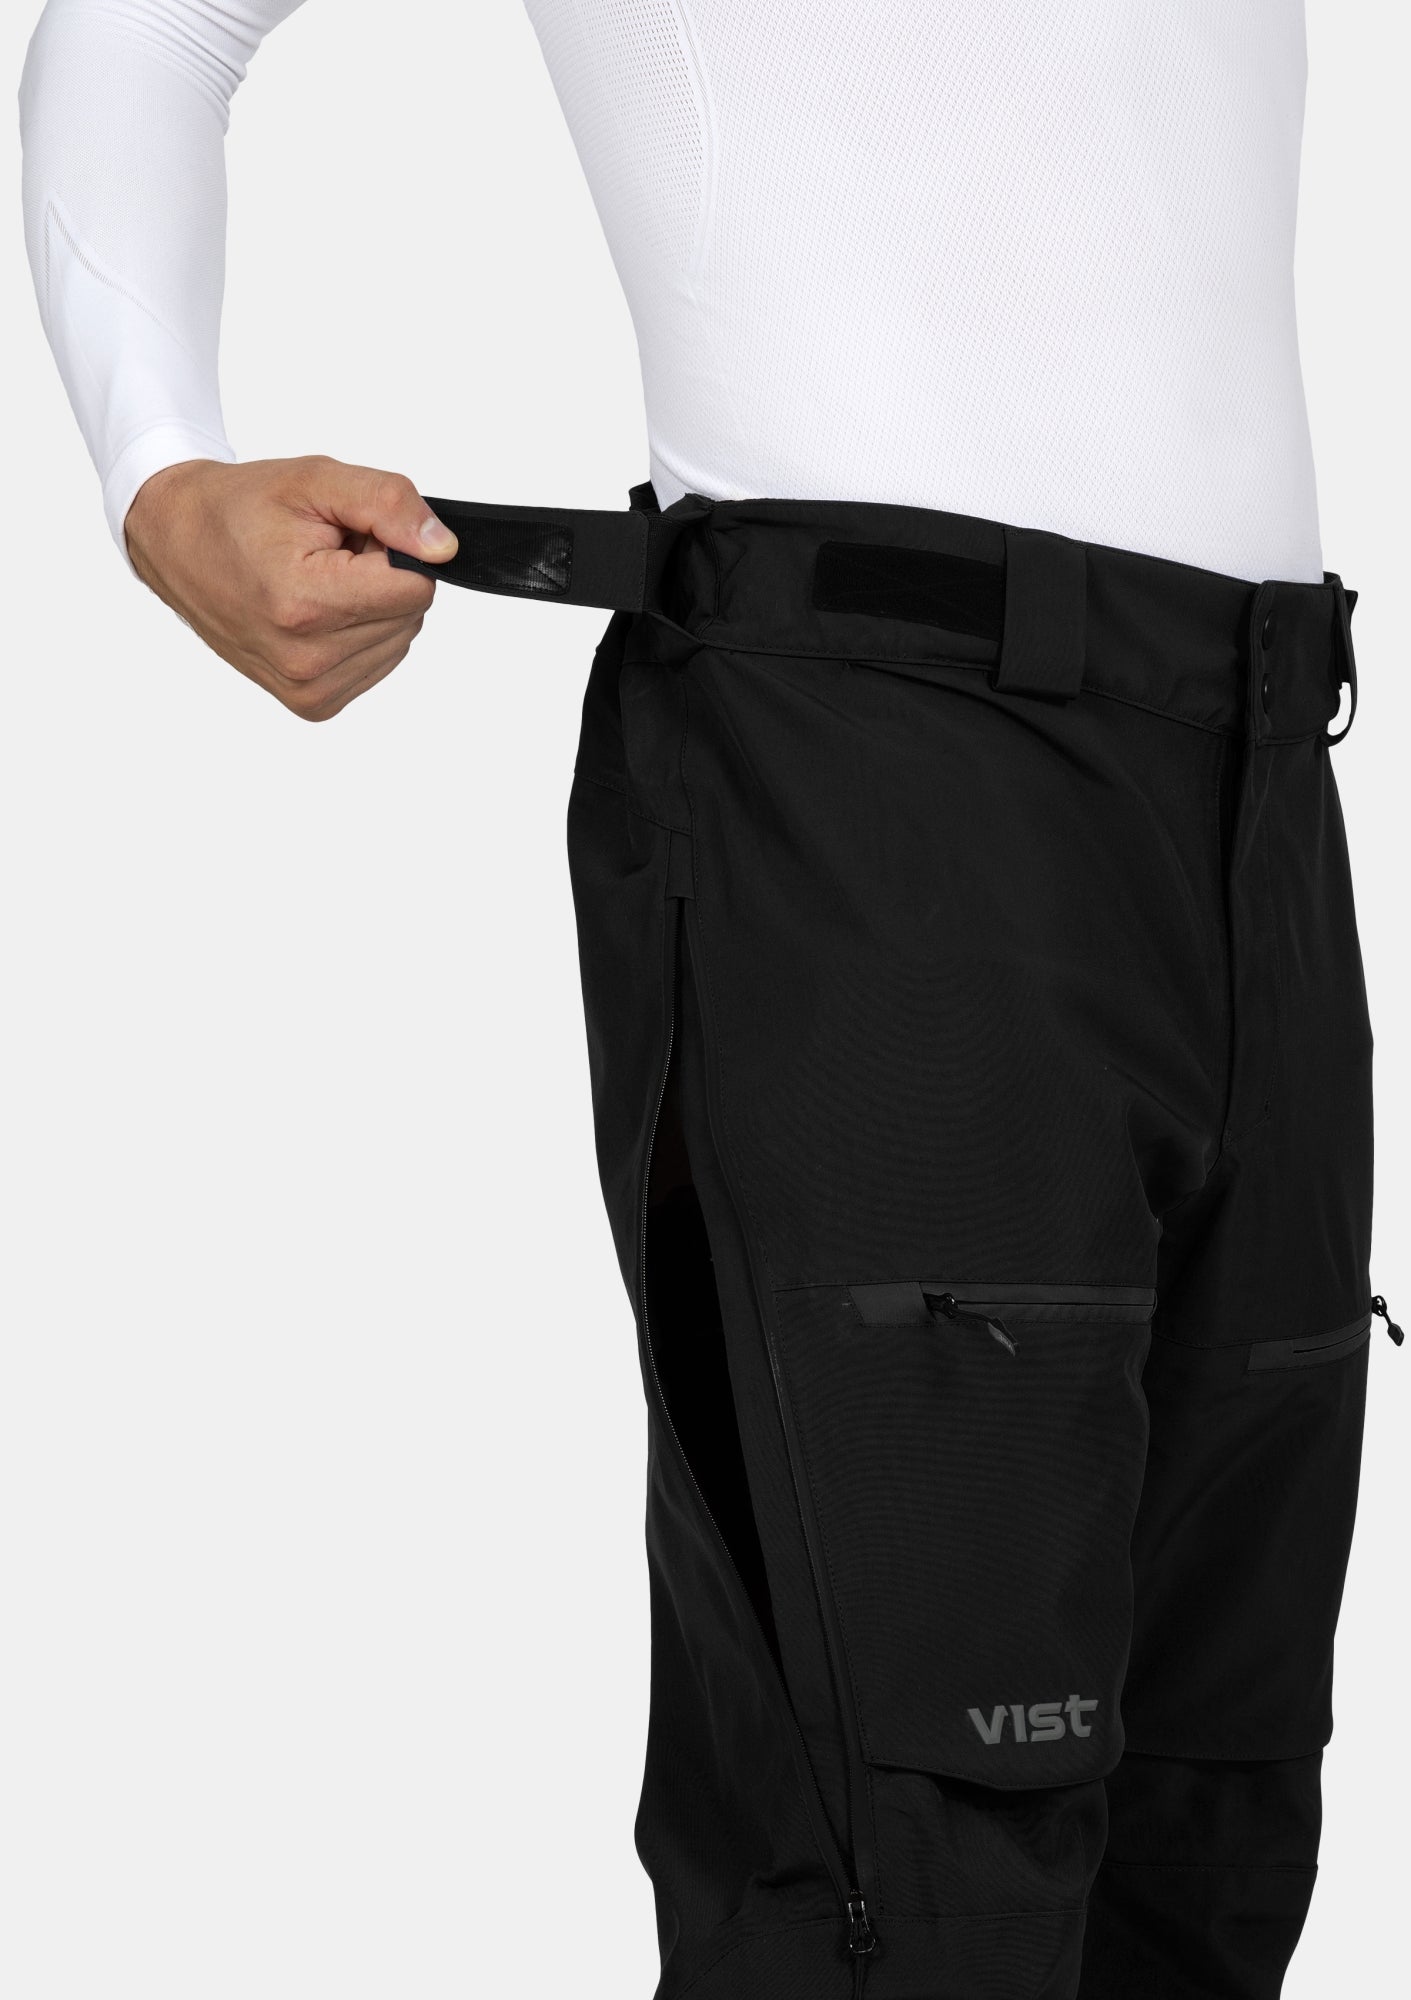 Pantaloni Nanoflex 3-L